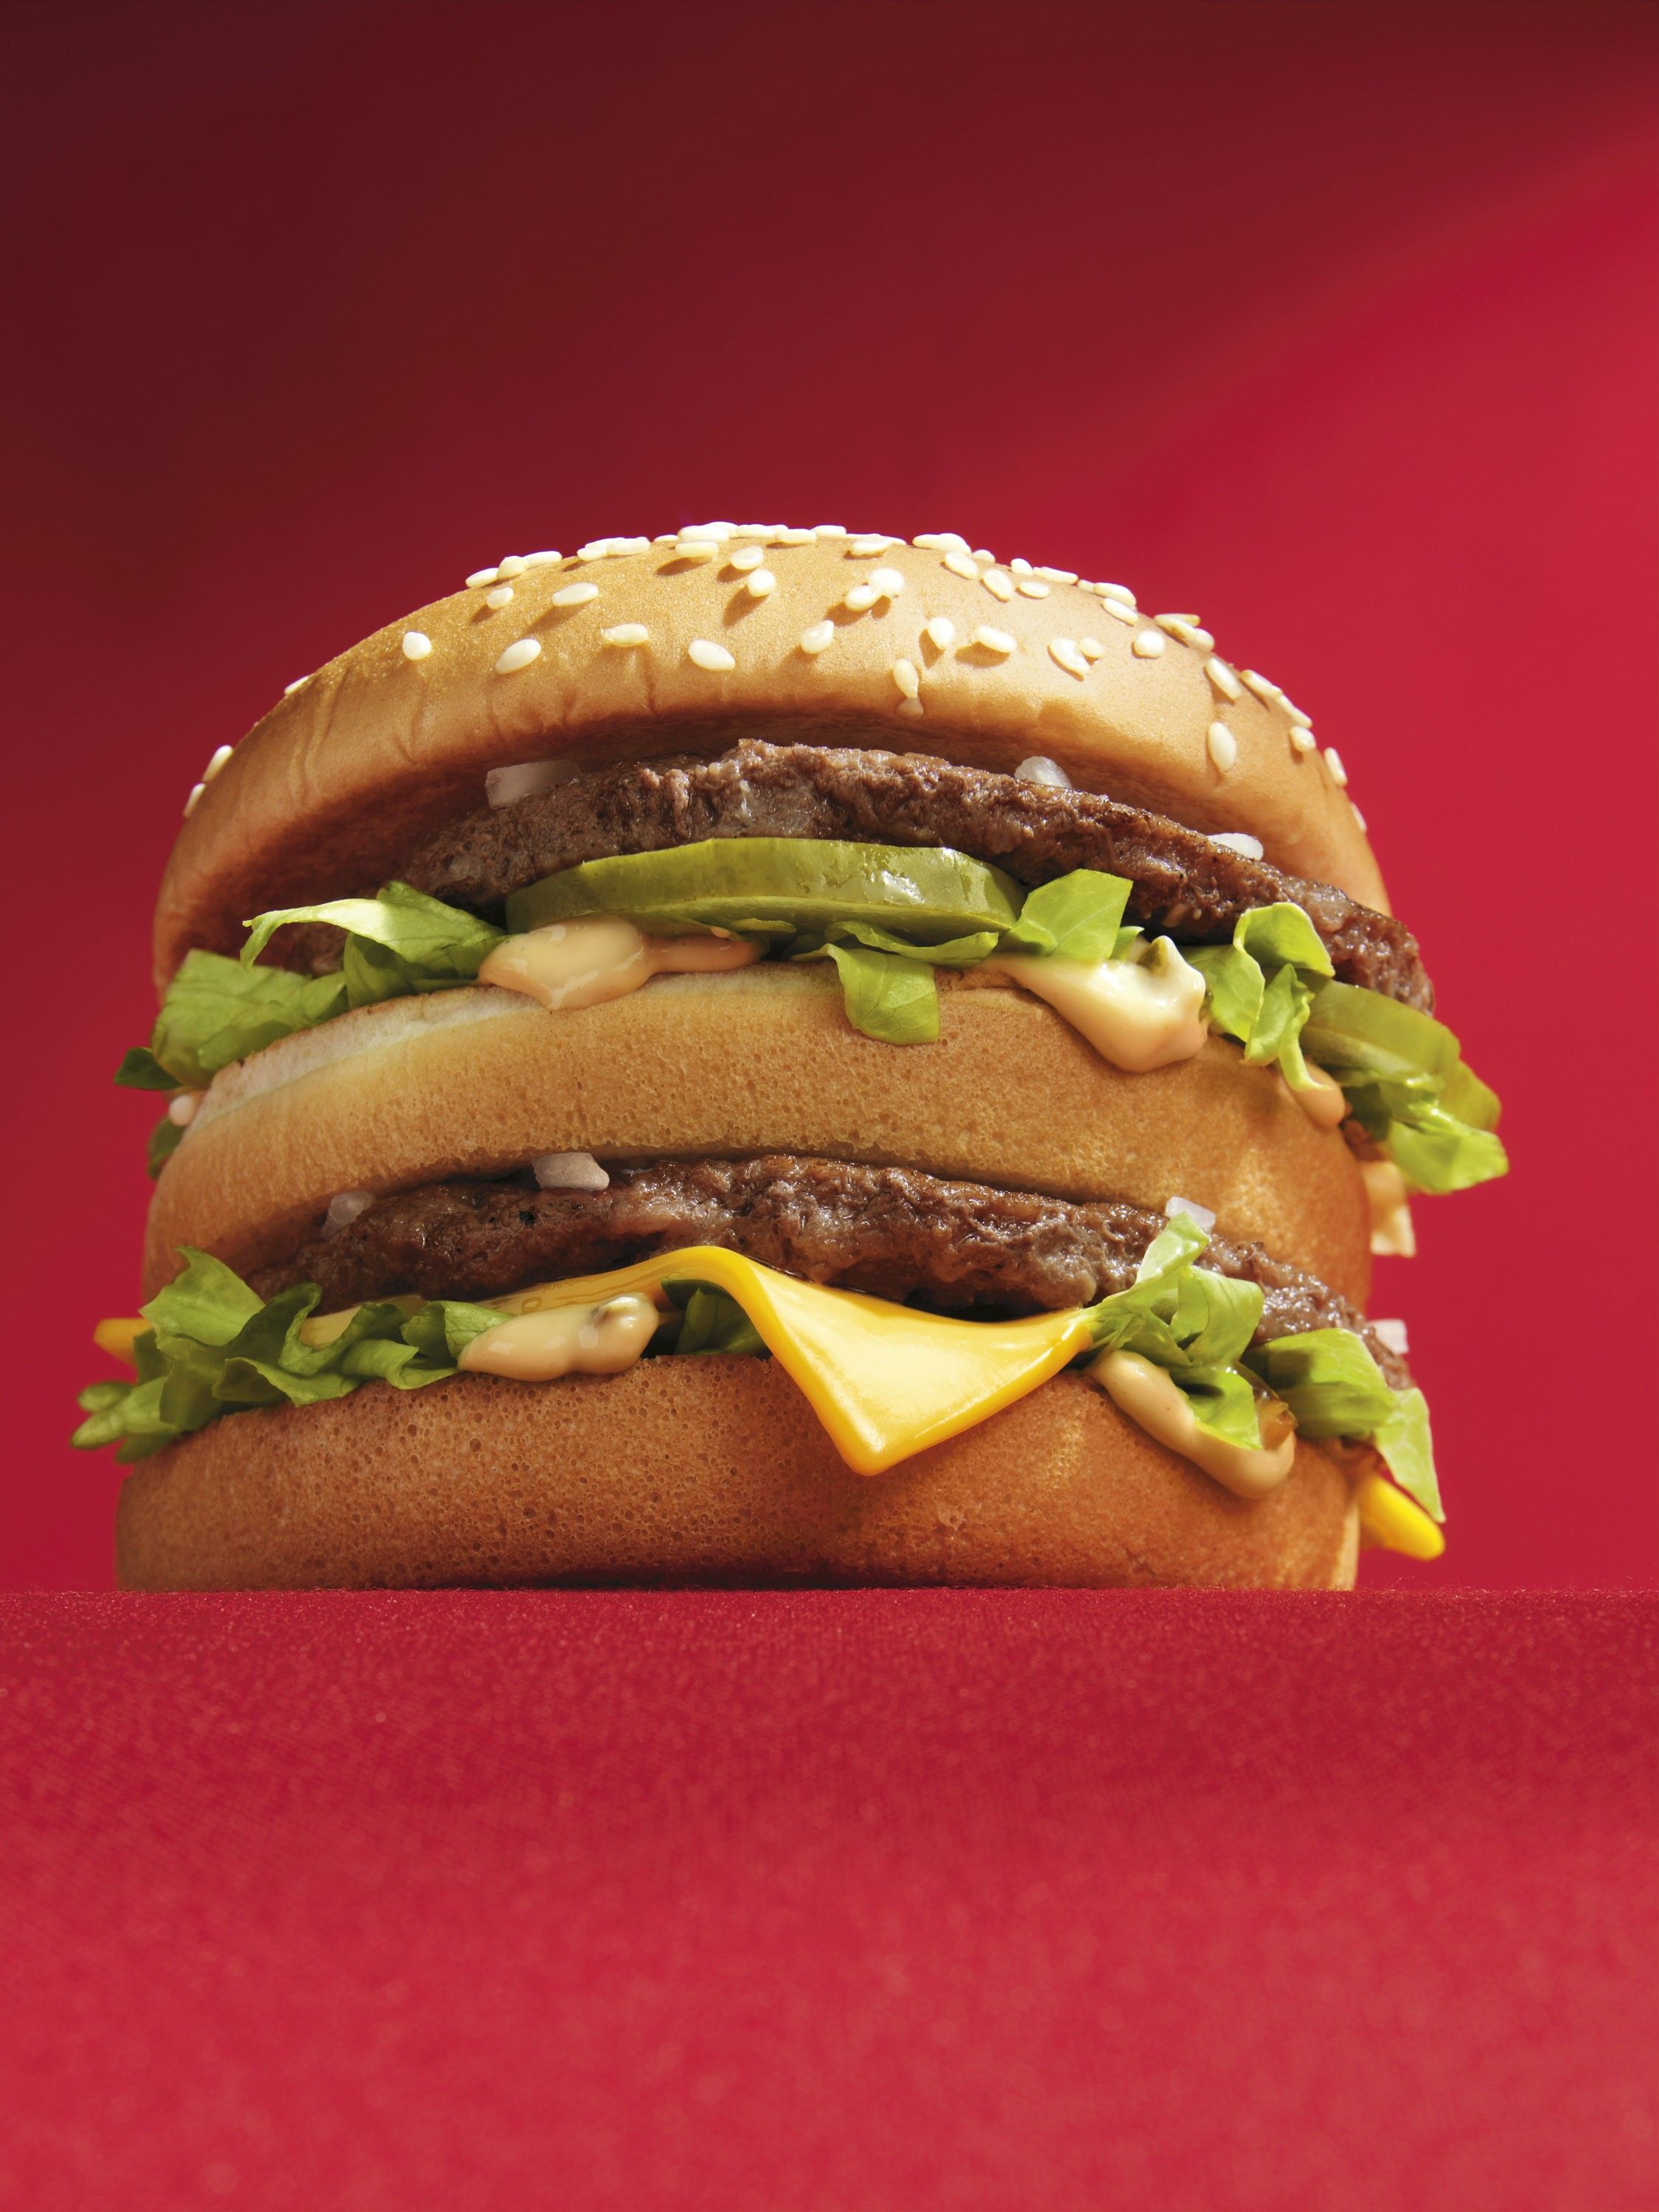 Wallpaper, meat, sandwich, burgers, fast food, hamburger, whopper, dish, produce, veggie burger, cheeseburger, big mac 2250x3000